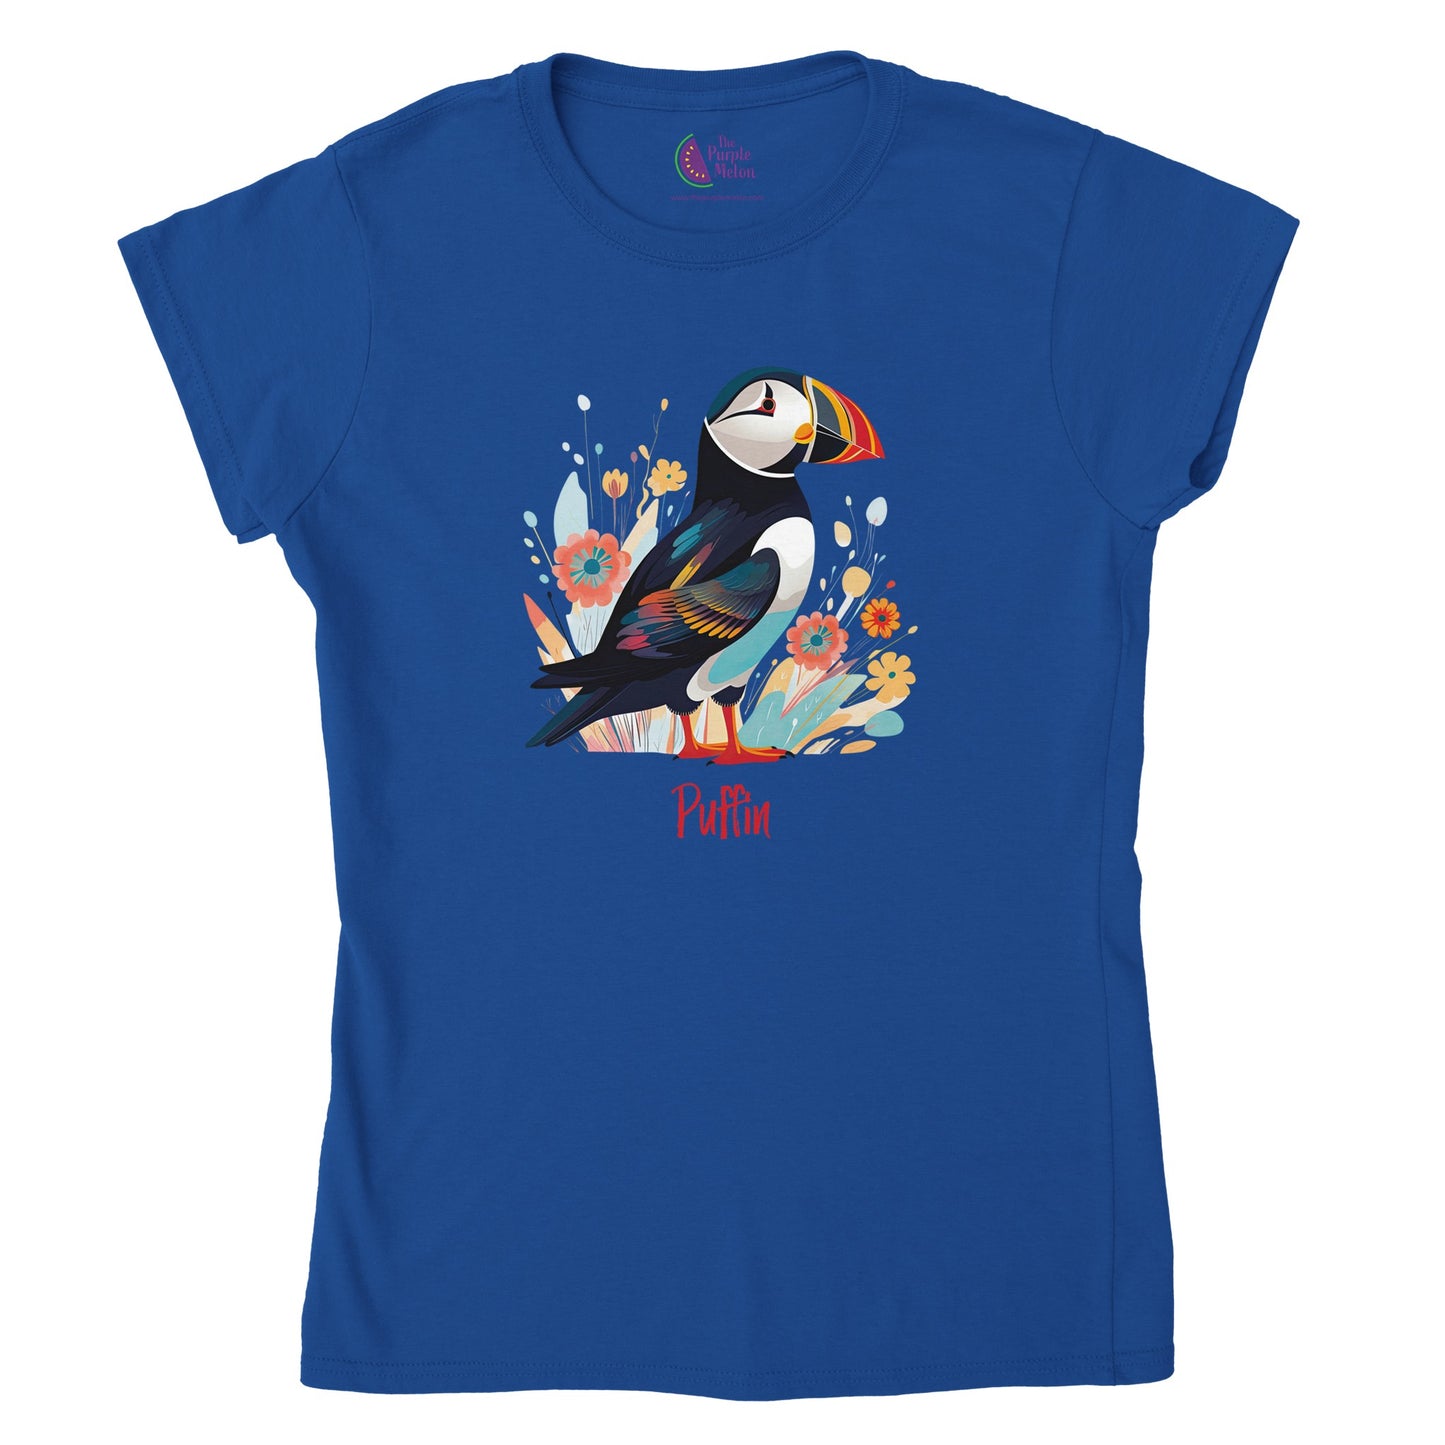 royal blue t-shirt with a puffin bird print